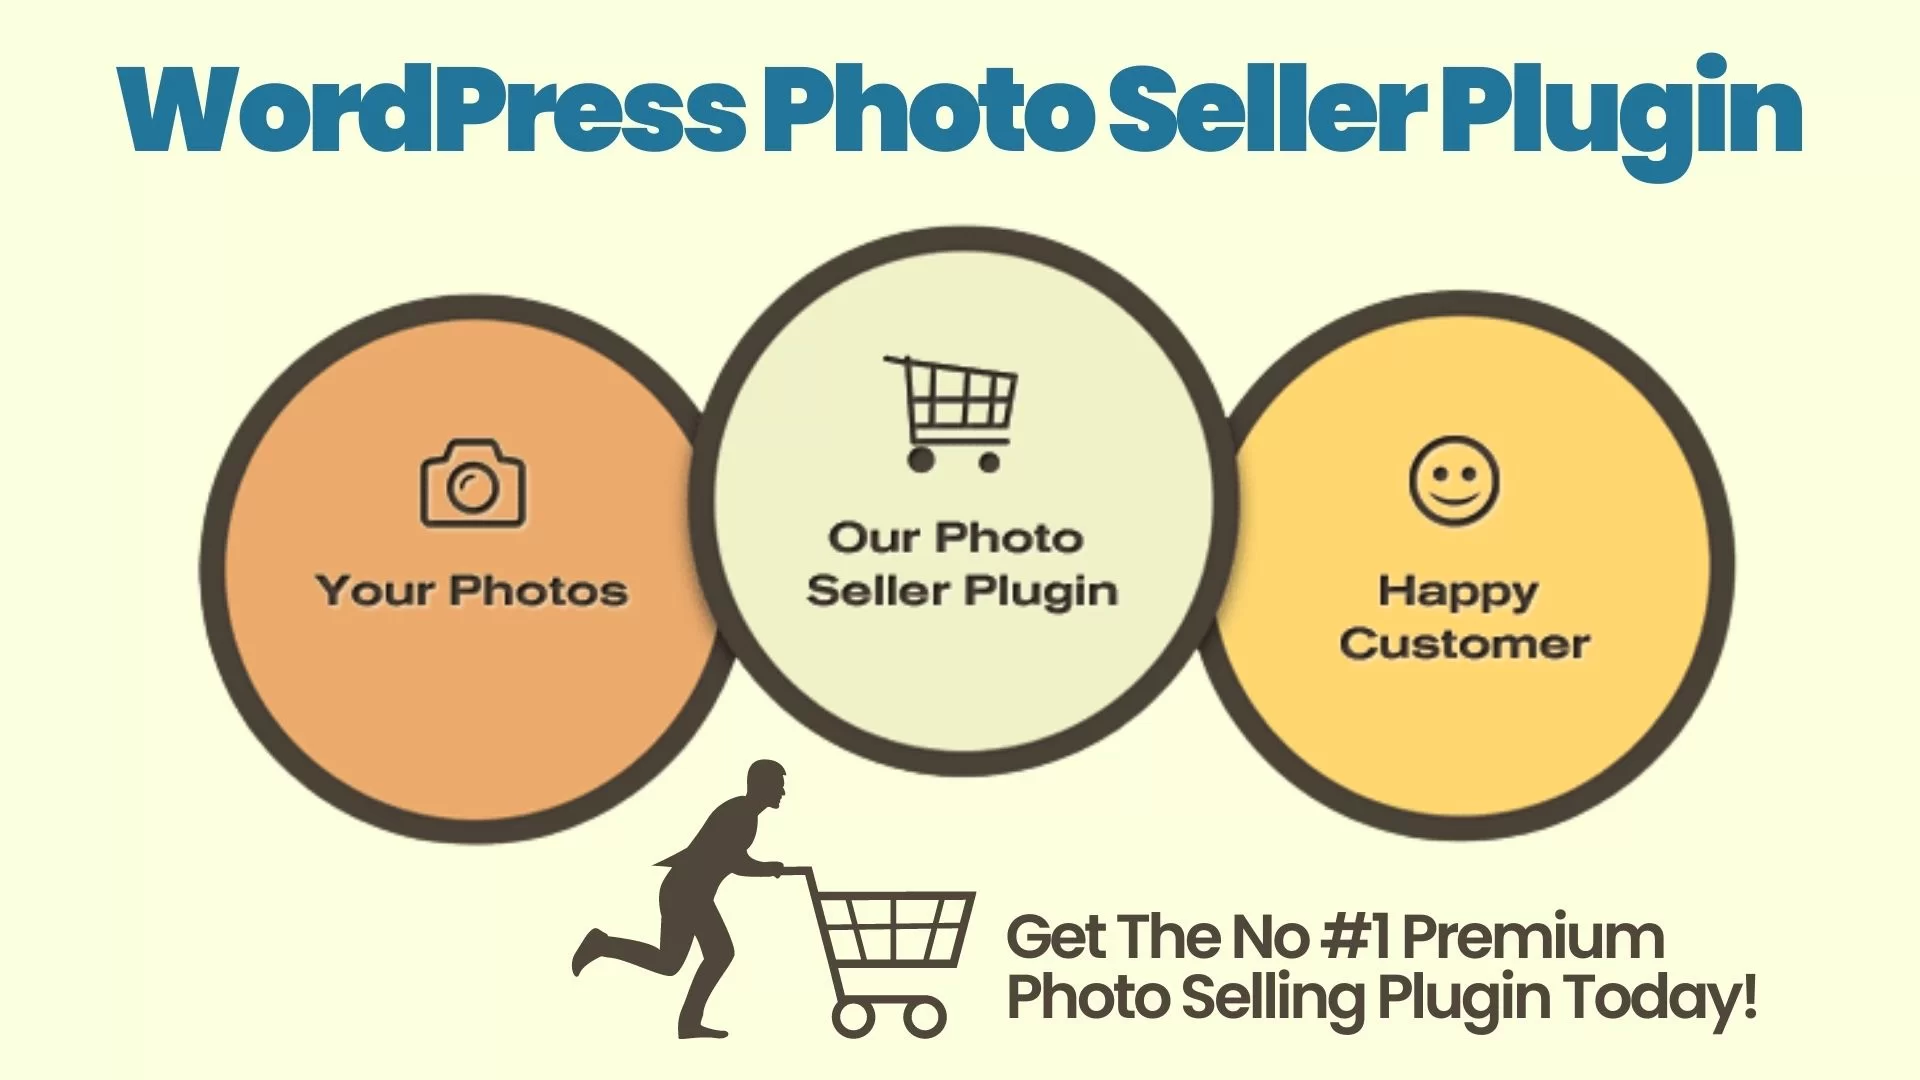 What Is WordPress Photo Seller Plugin?